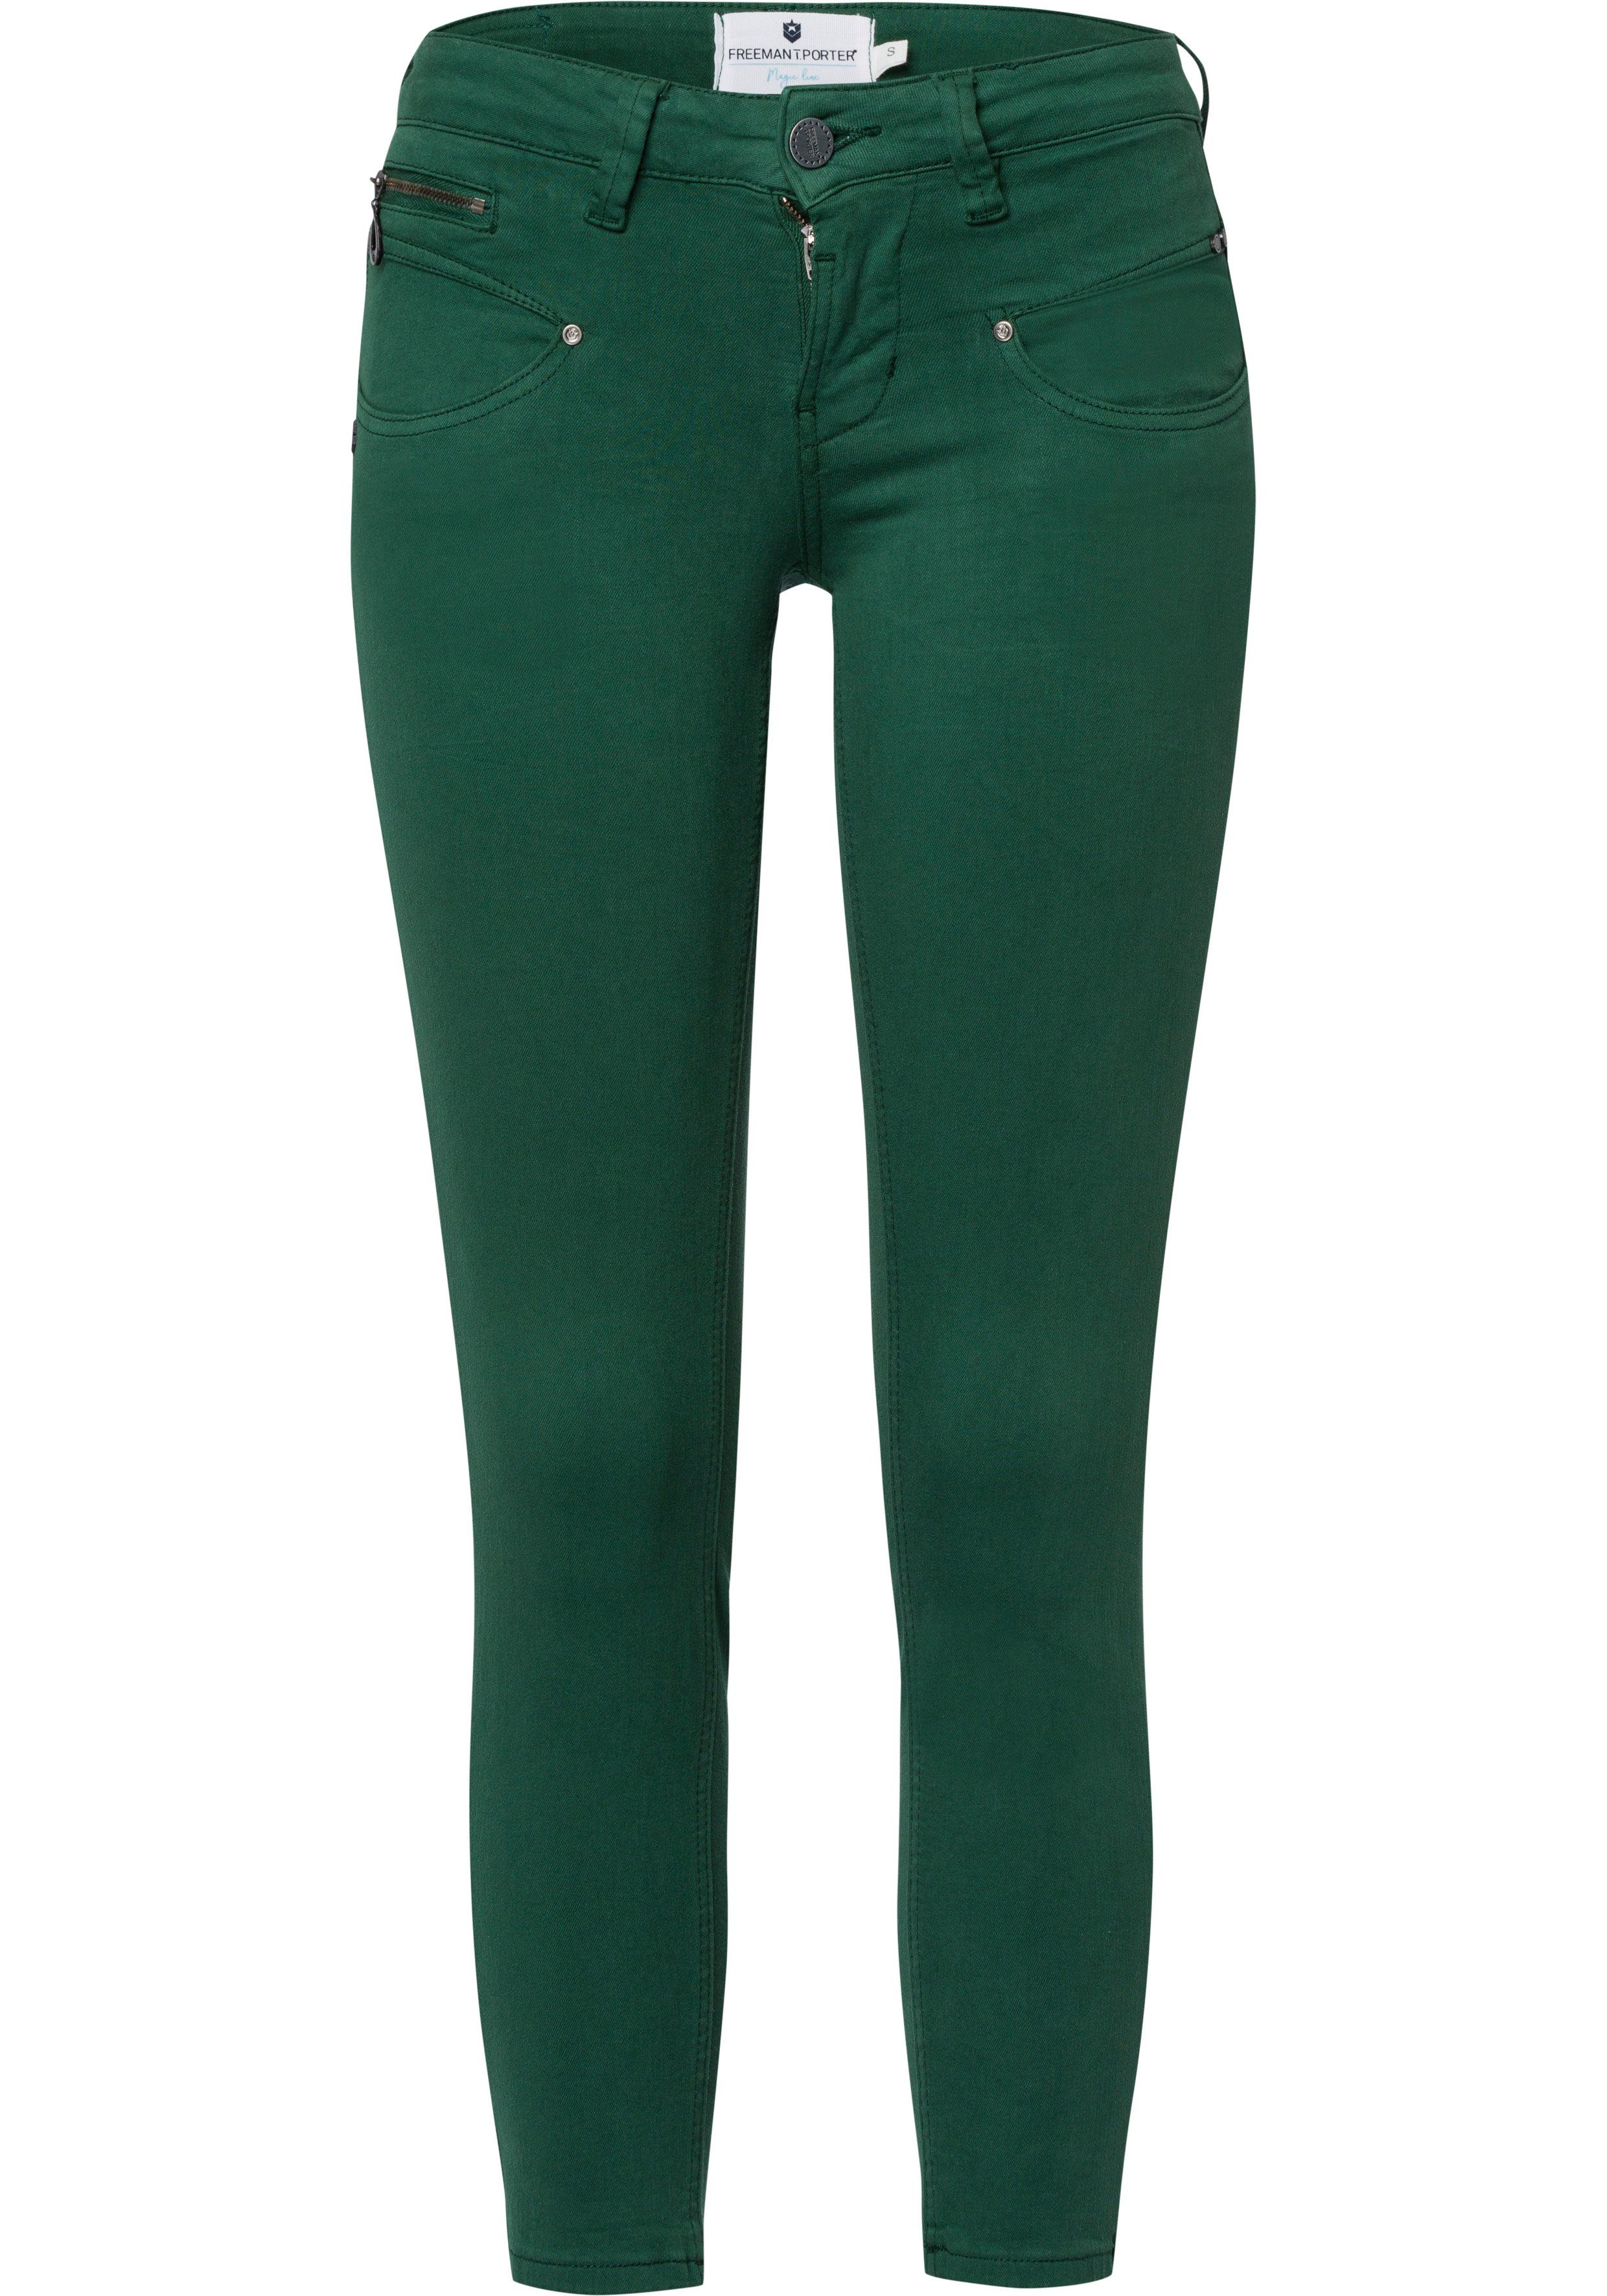 Grüne Skinny-Jeans online kaufen | OTTO